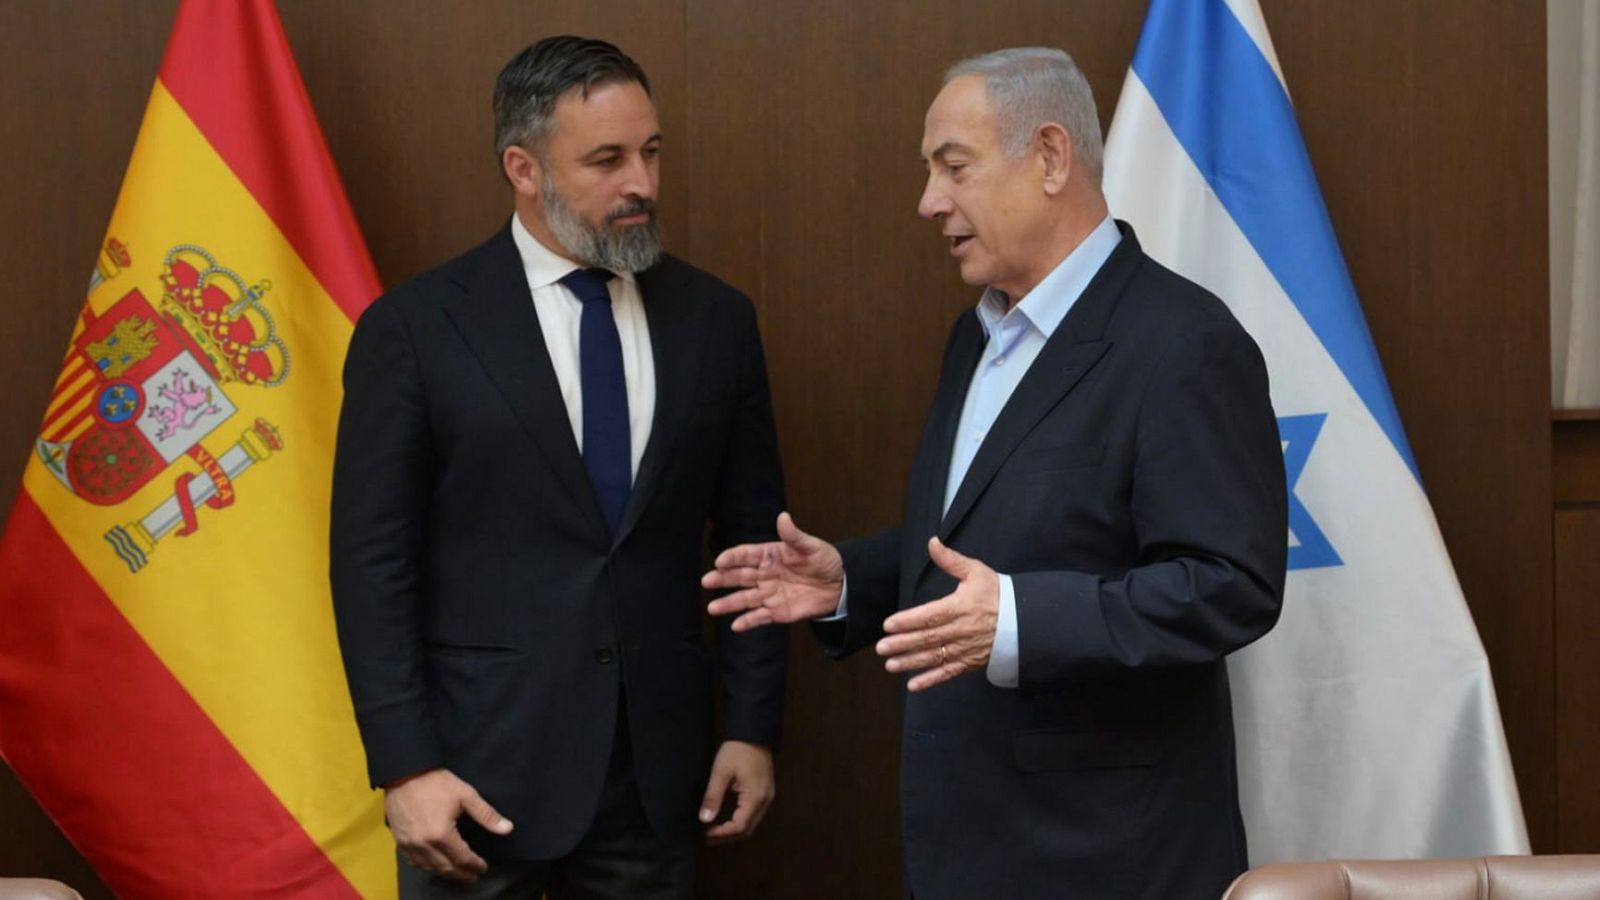 Abascal visita a Netanyahu en Jerusalén: "Pedro Sánchez no es España"